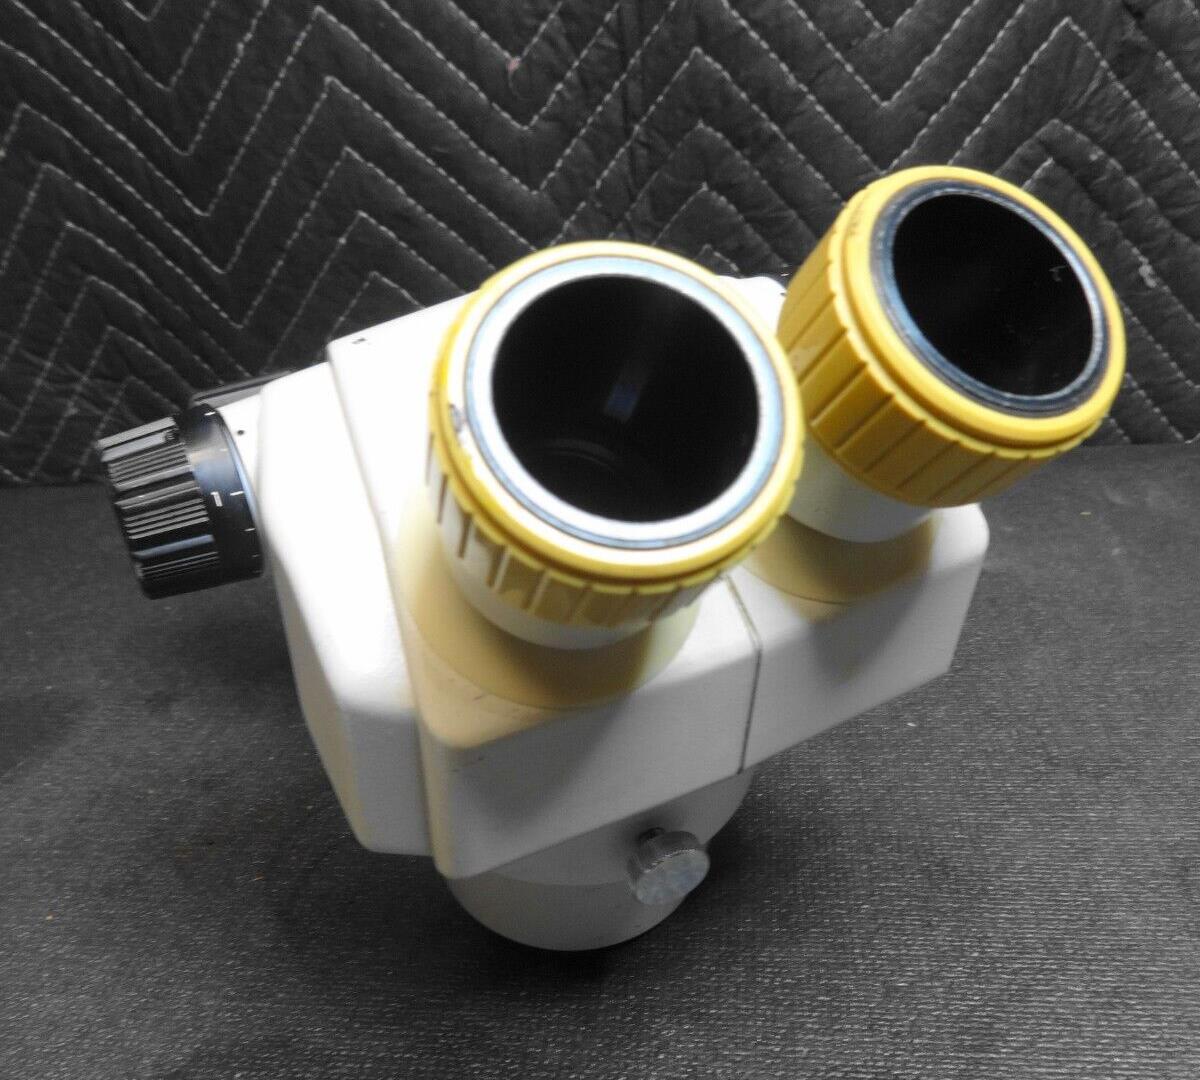 Nikon SMZ-1 stereomicroscope head - stereo microscope